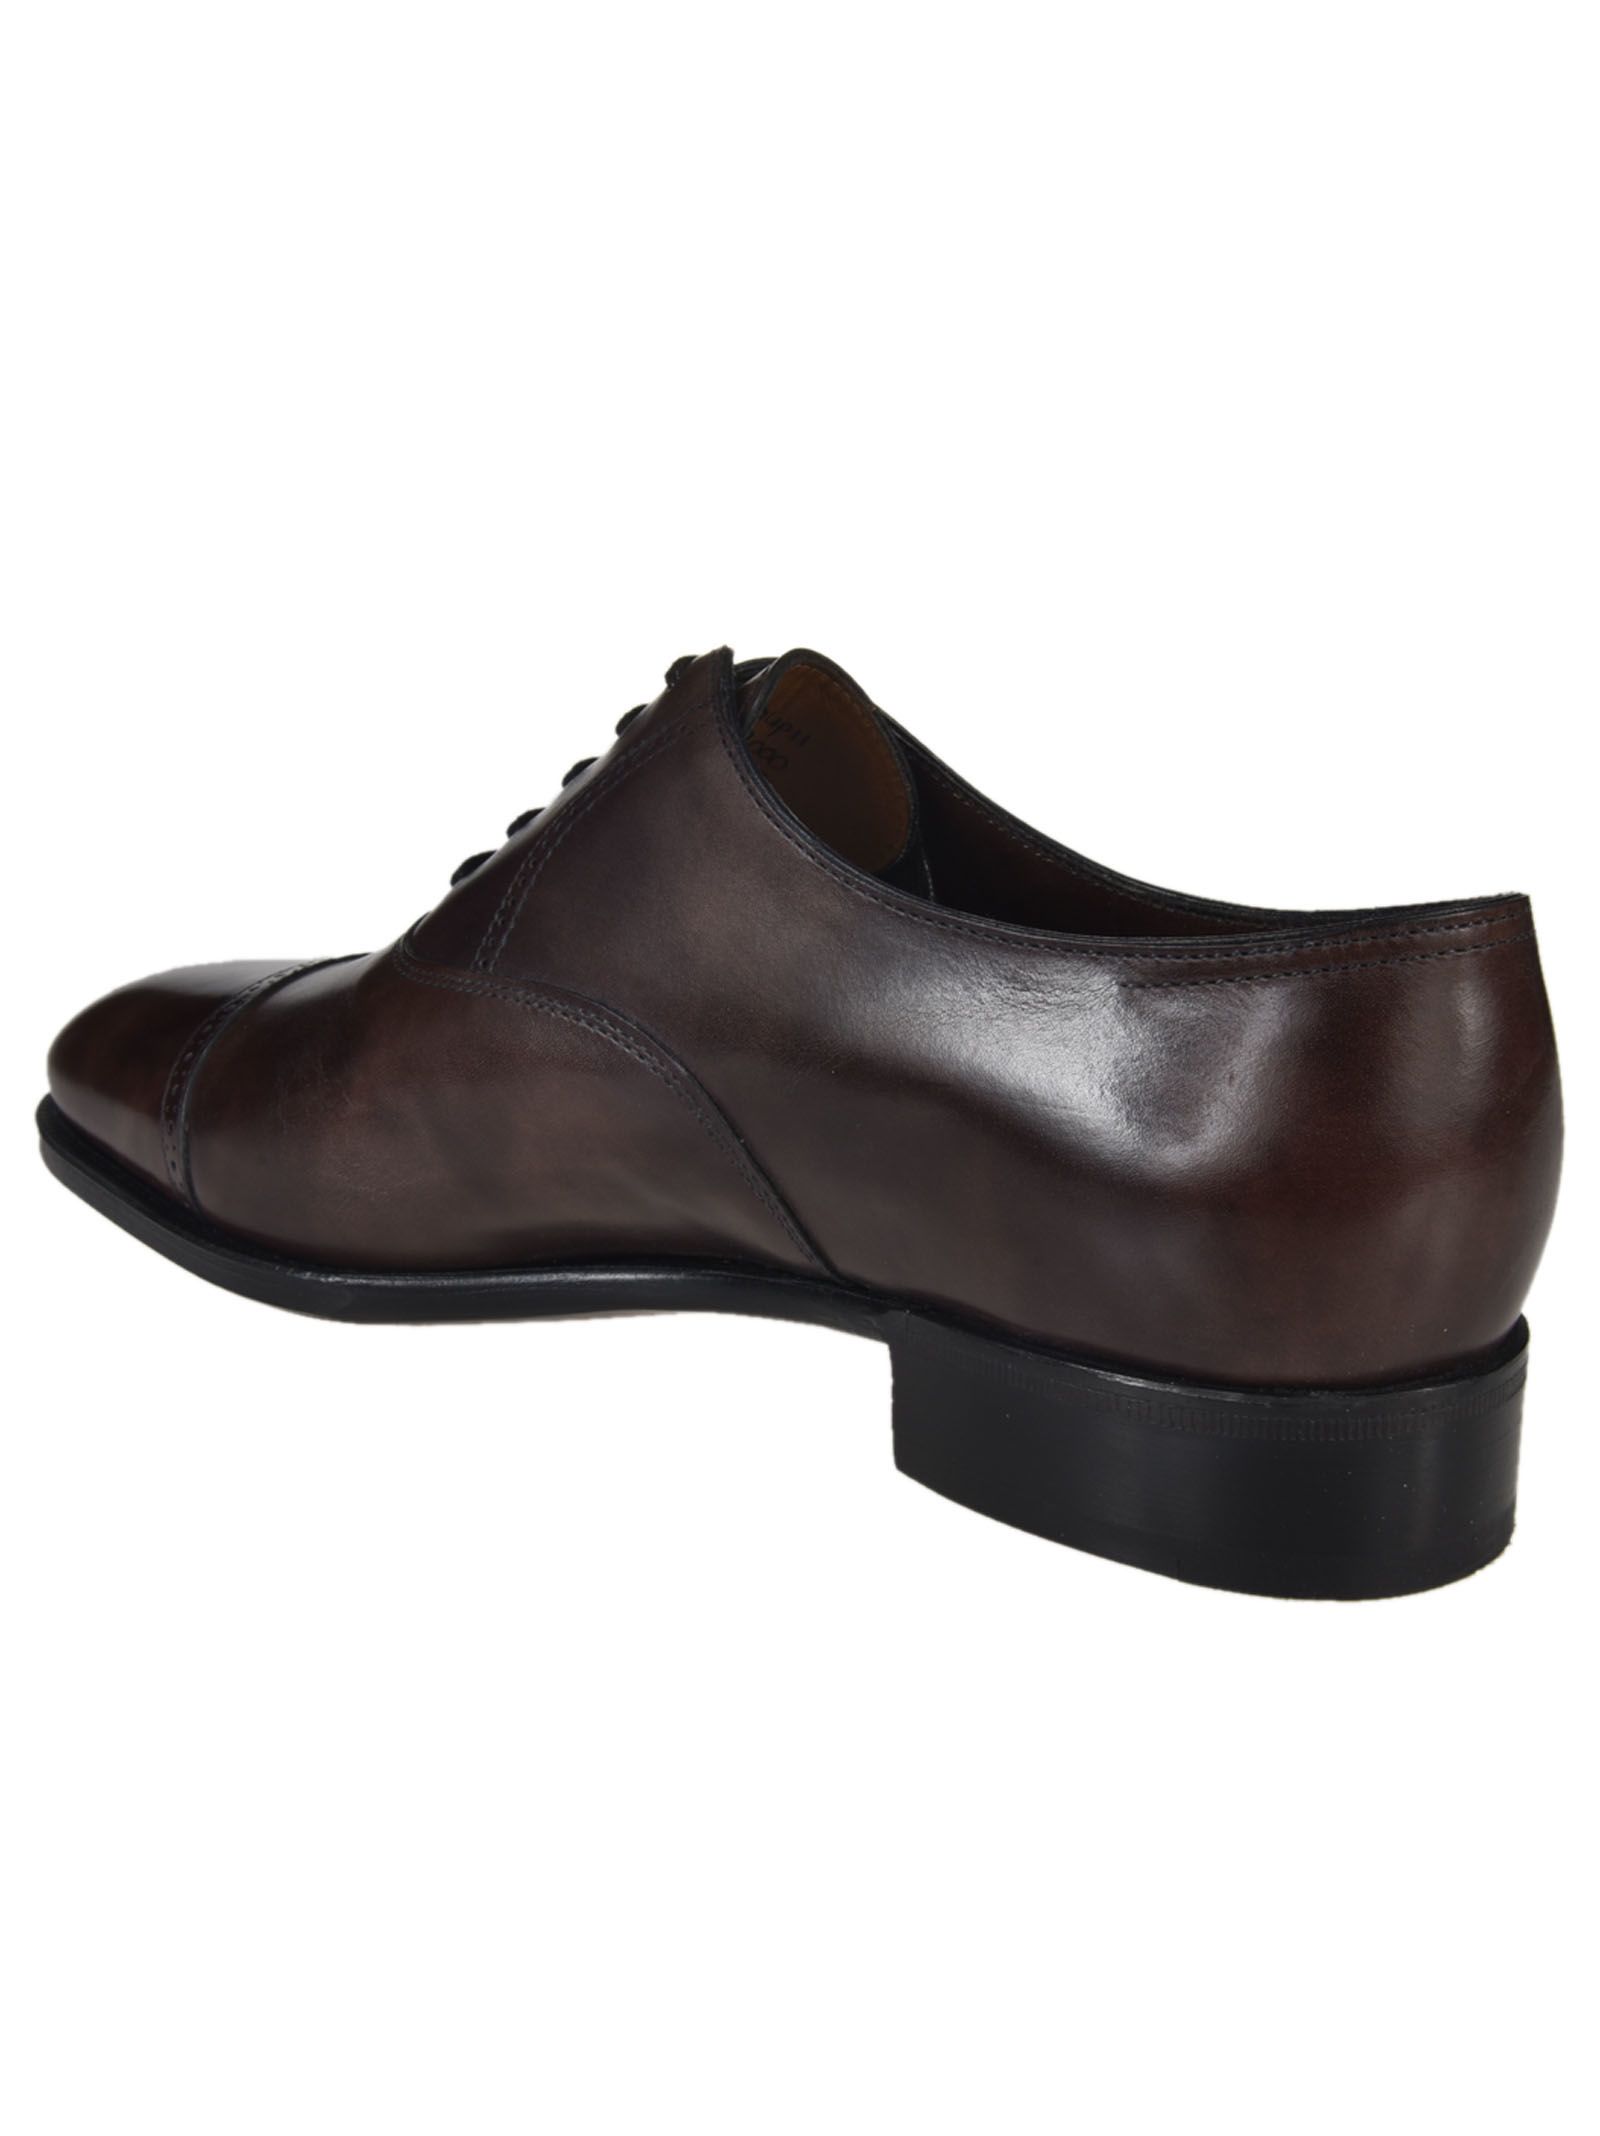 John Lobb - John Lobb Philip II Oxford Shoes - Brown, Men's Laced Shoes ...